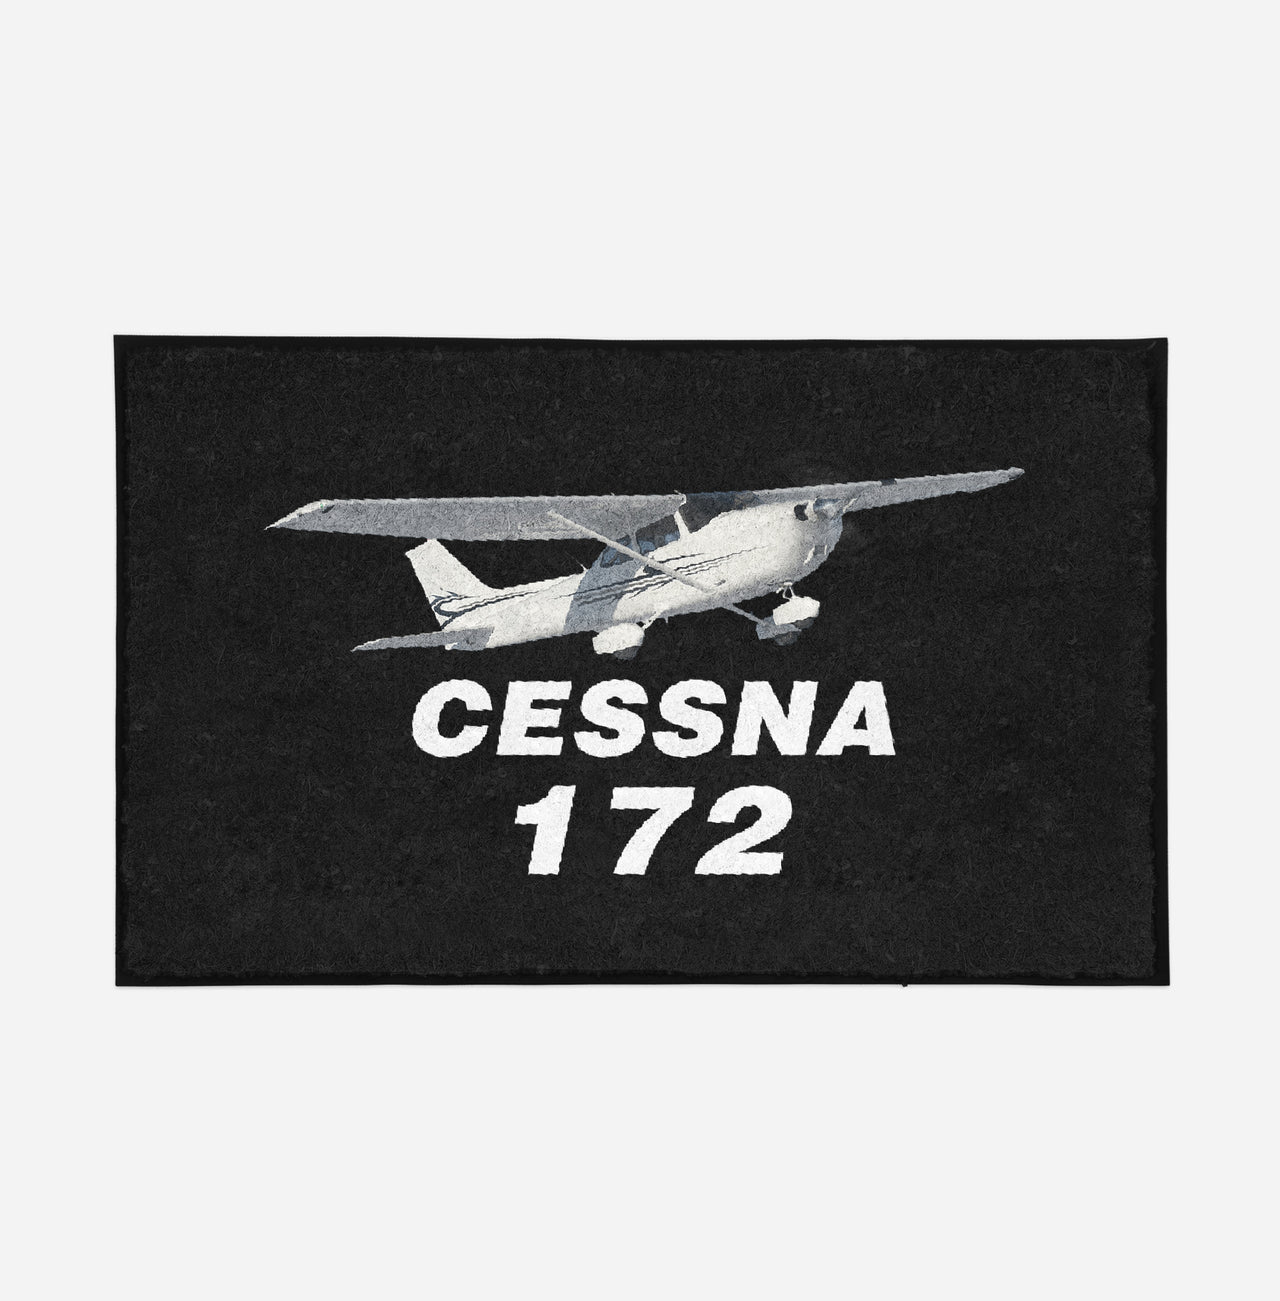 The Cessna 172 Designed Door Mats